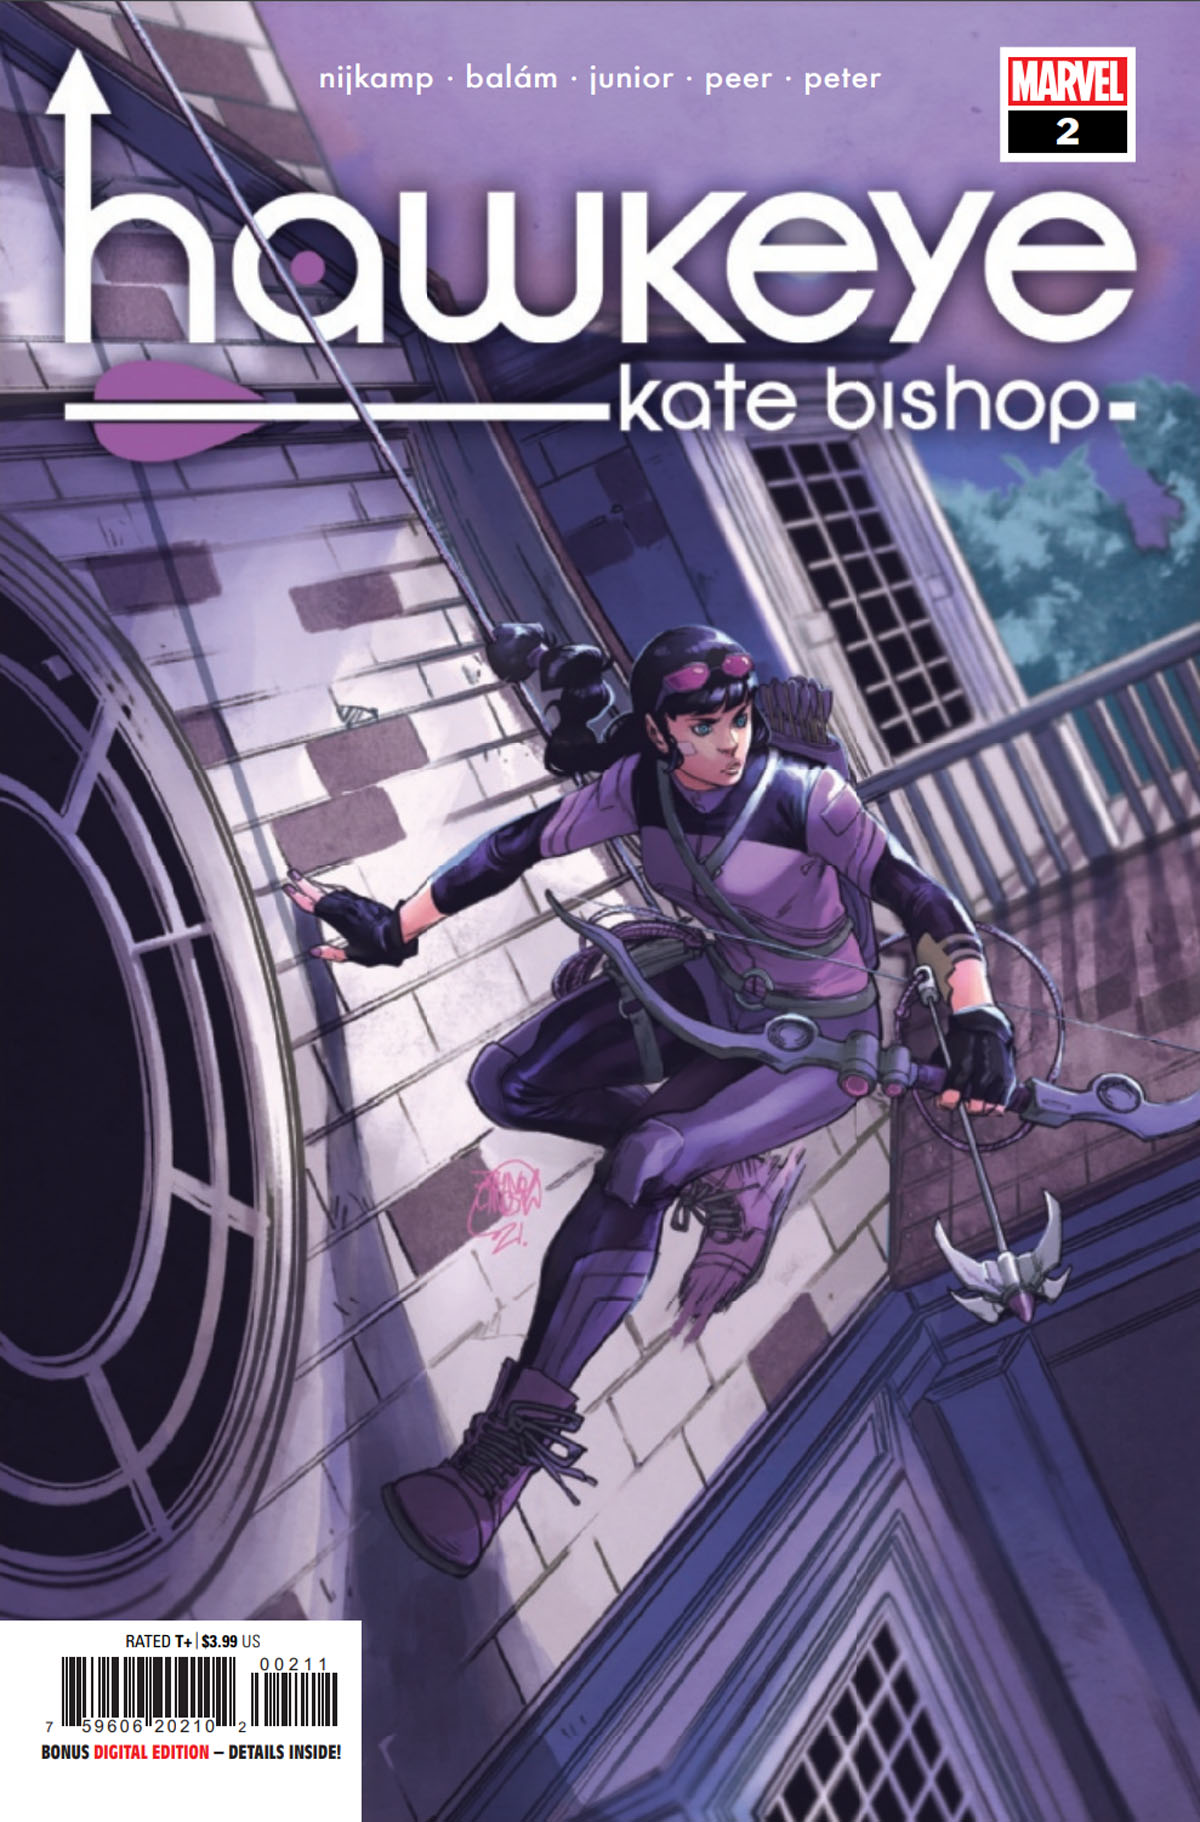 Hawkeye: Kate Bishop #2 cover